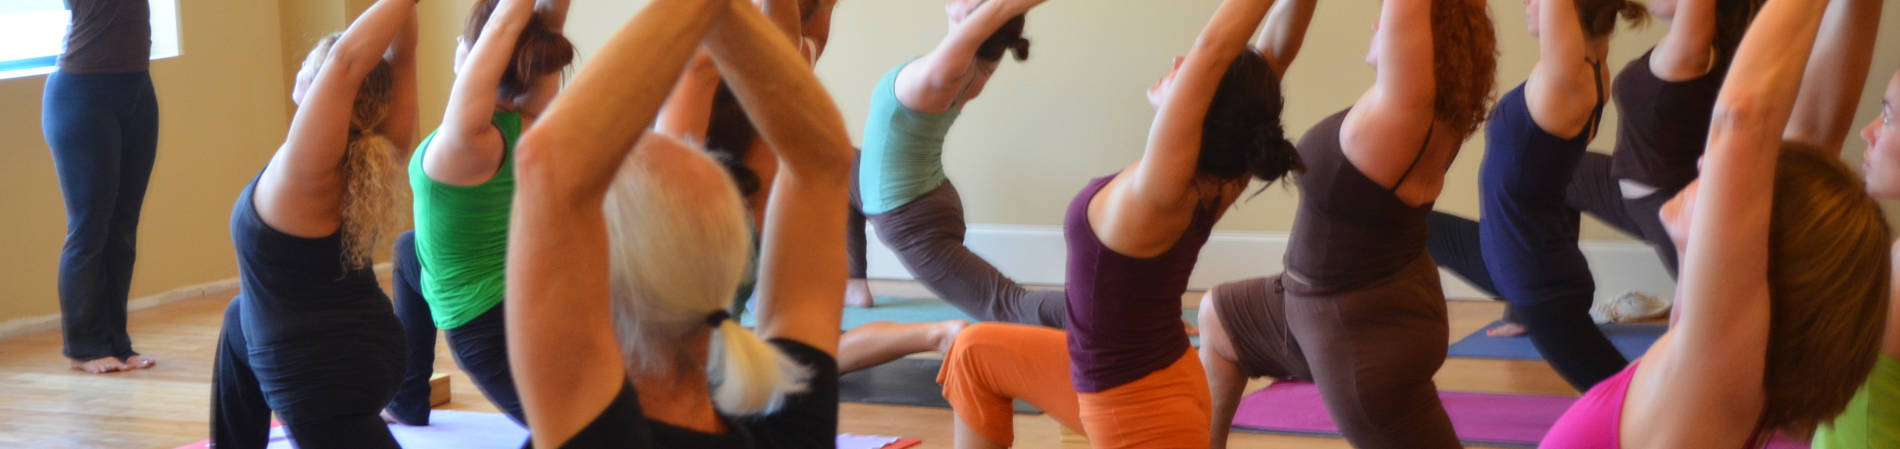 Aulas de yoga online